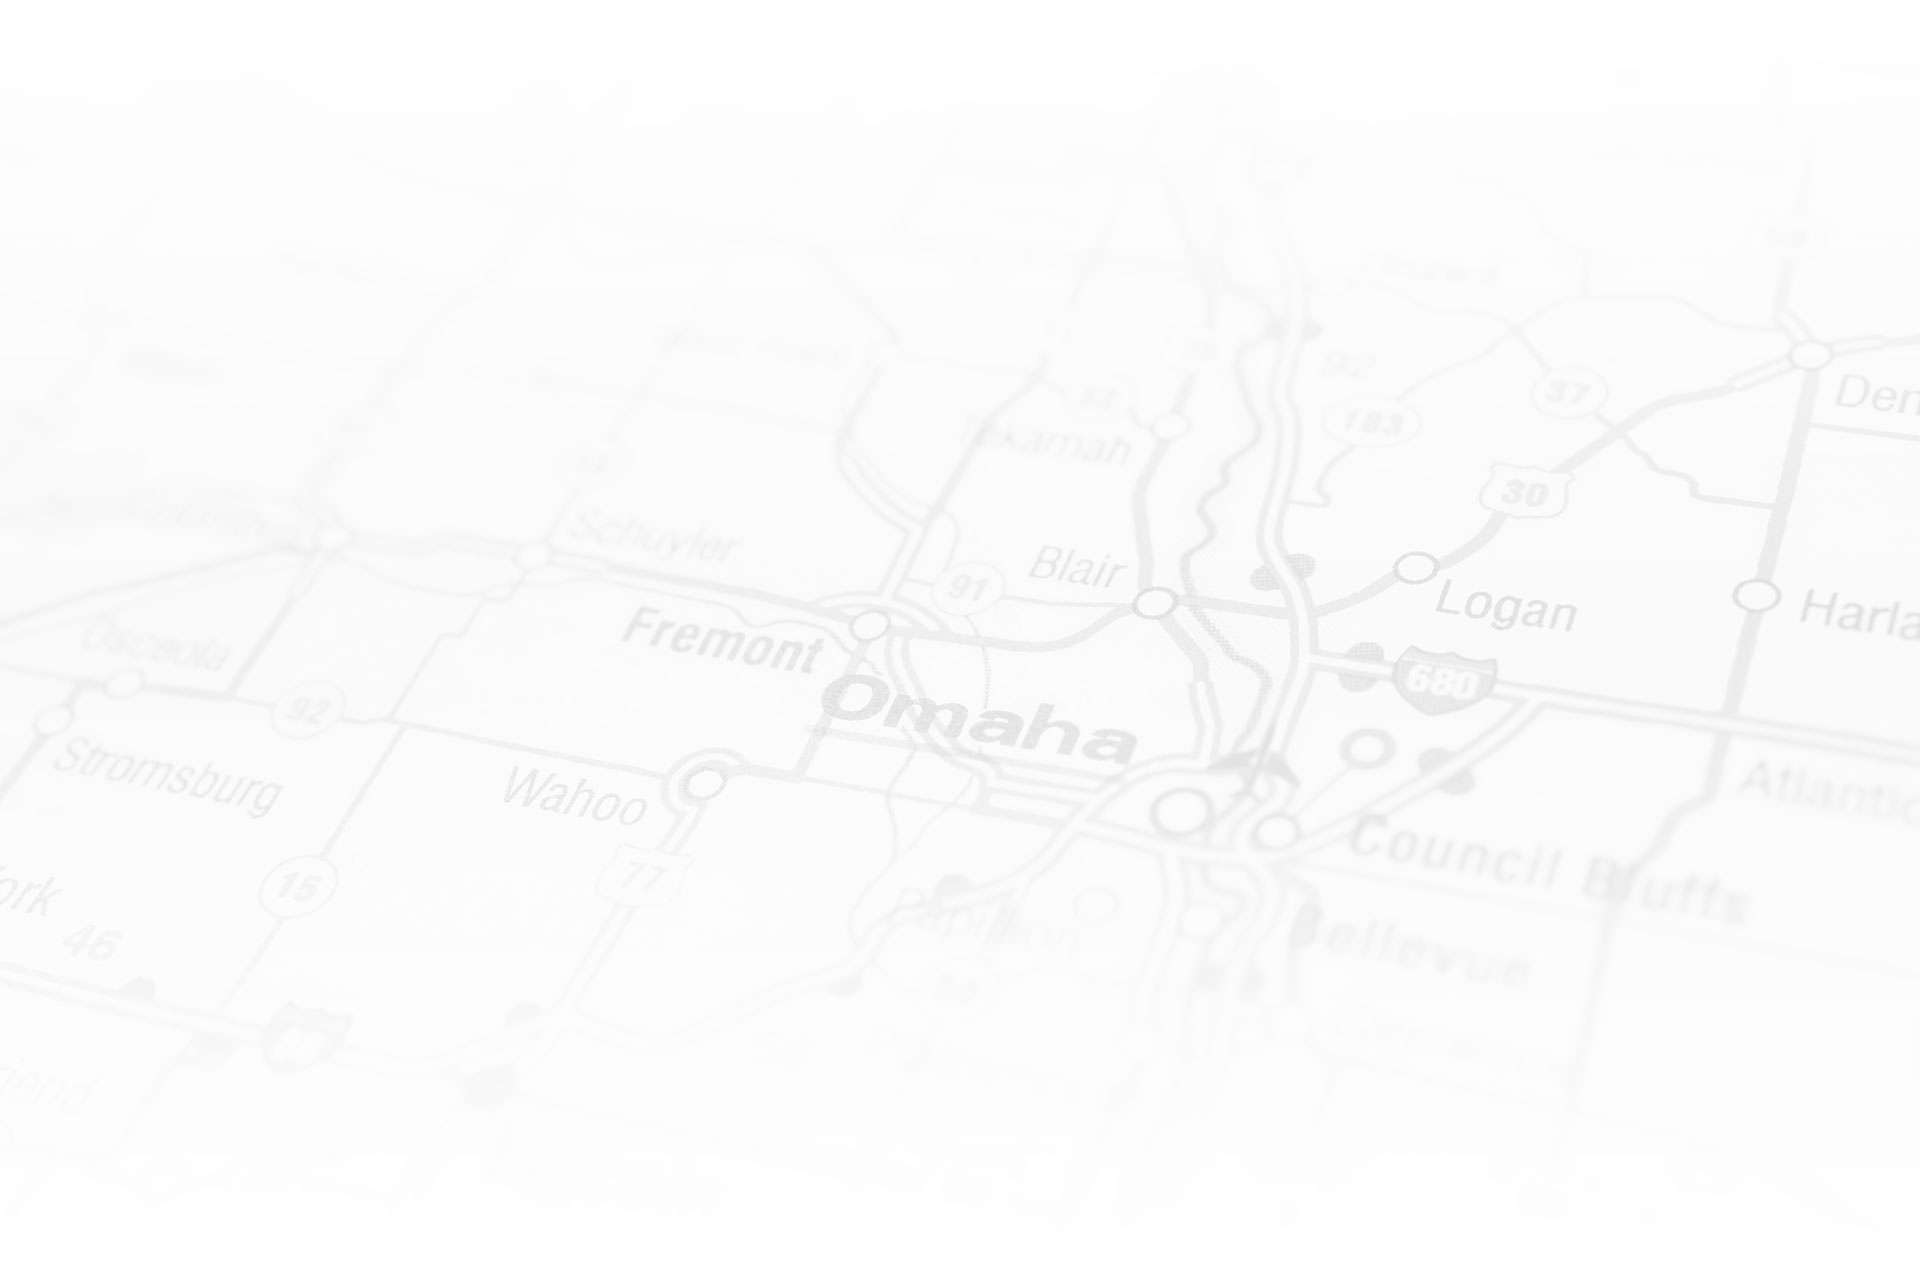 Omaha, Nebraska map background.